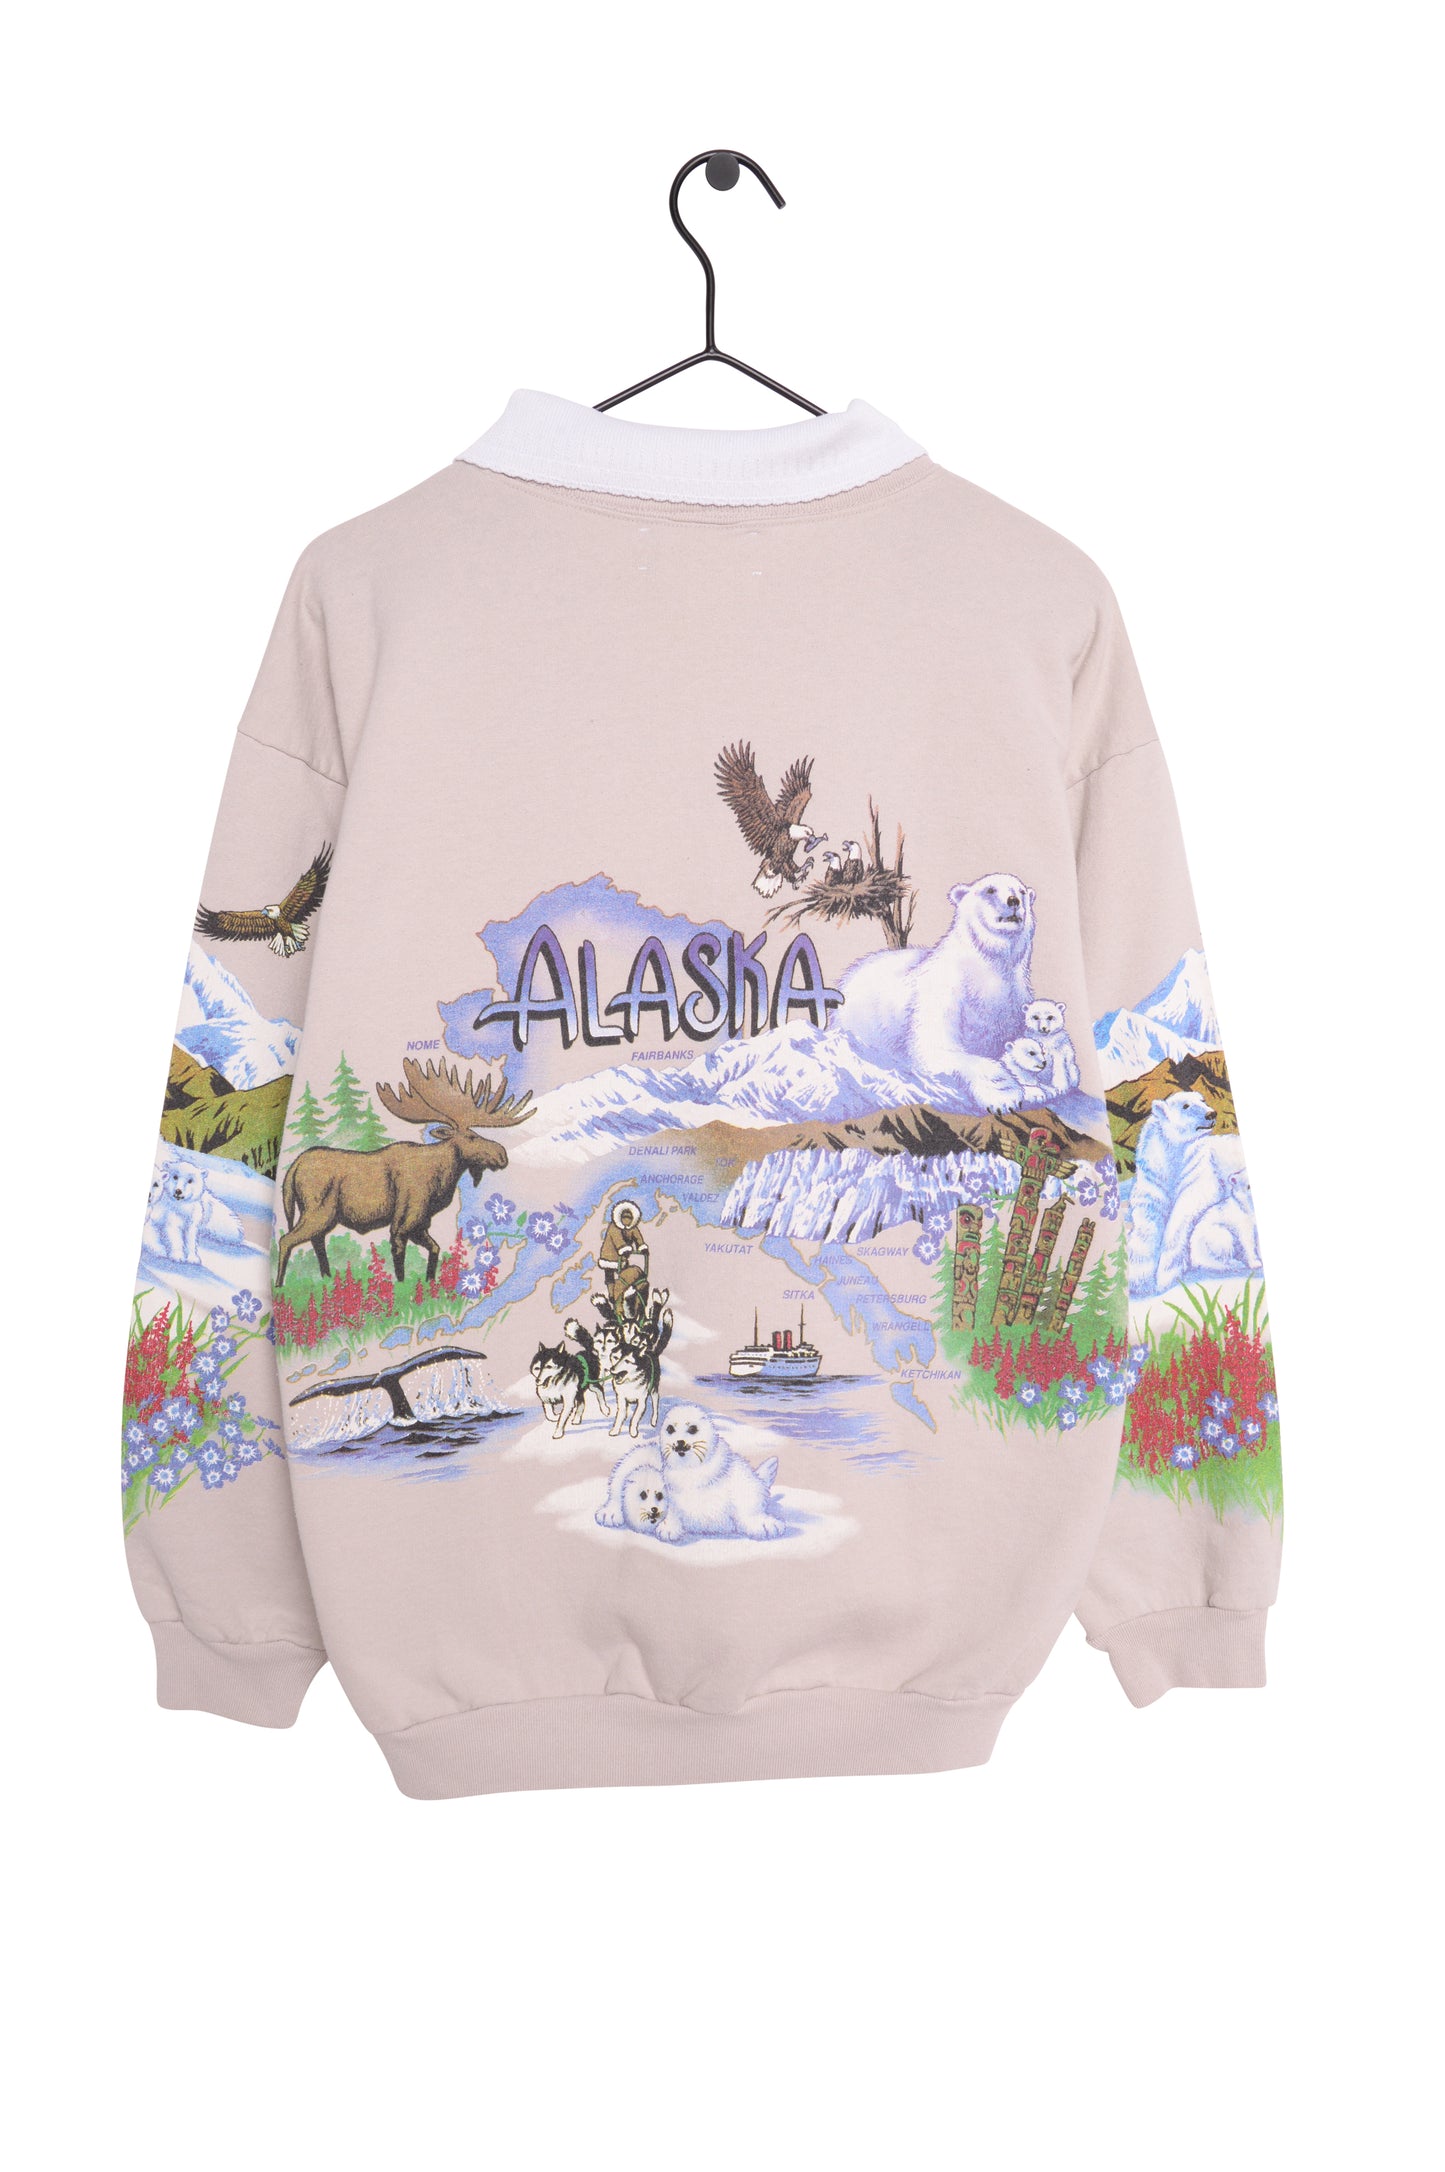 1990s Alaska Wildlife Sweatshirt USA